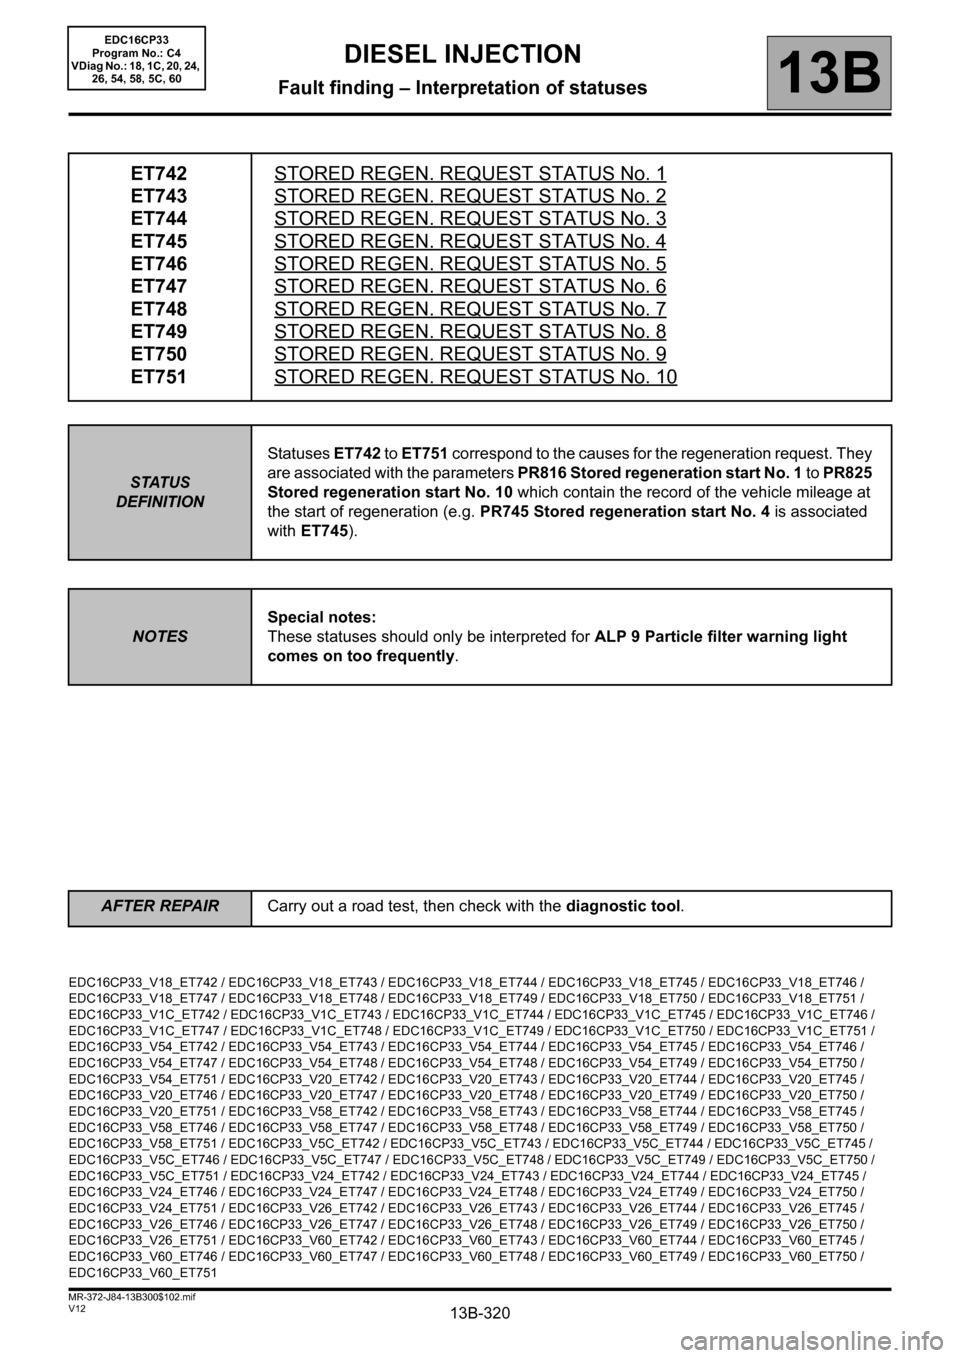 RENAULT SCENIC 2012 J95 / 3.G Engine And Peripherals EDC16CP33 Workshop Manual 13B-320V12 MR-372-J84-13B300$102.mif
DIESEL INJECTION
Fault finding – Interpretation of statuses13B
ET742
ET743
ET744
ET745
ET746
ET747
ET748
ET749
ET750
ET751STORED REGEN. REQUEST STATUS No. 1
STOR